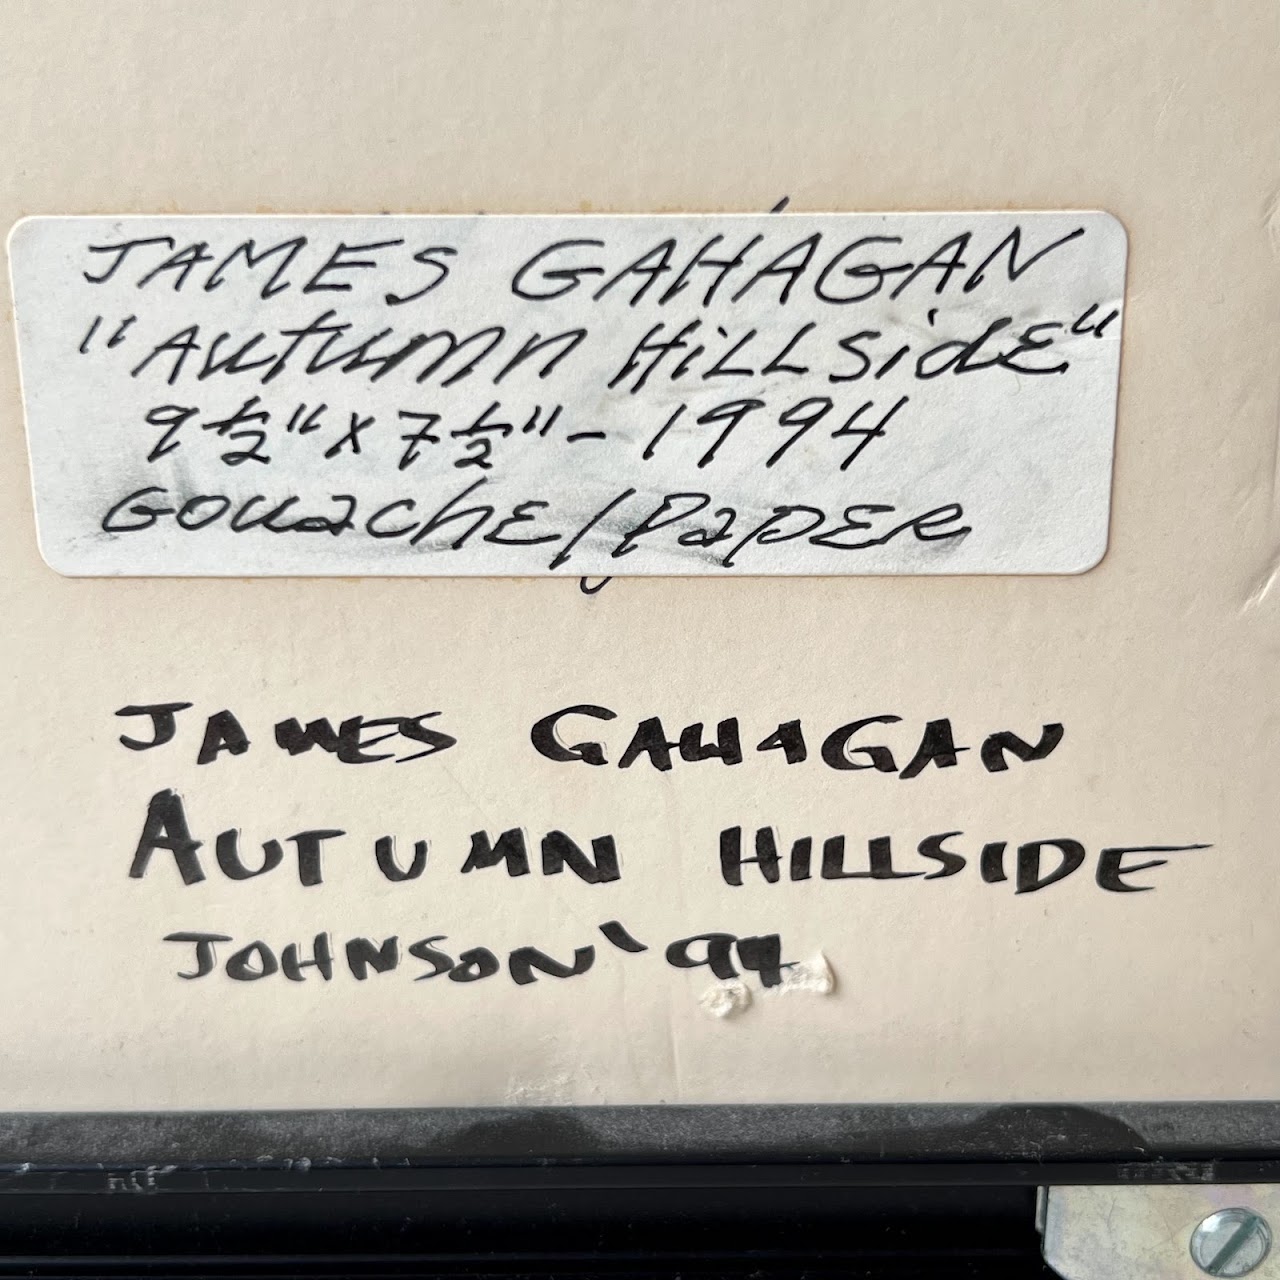 James Gahagan 'Autumn Hillside' Signed Gouache Painting